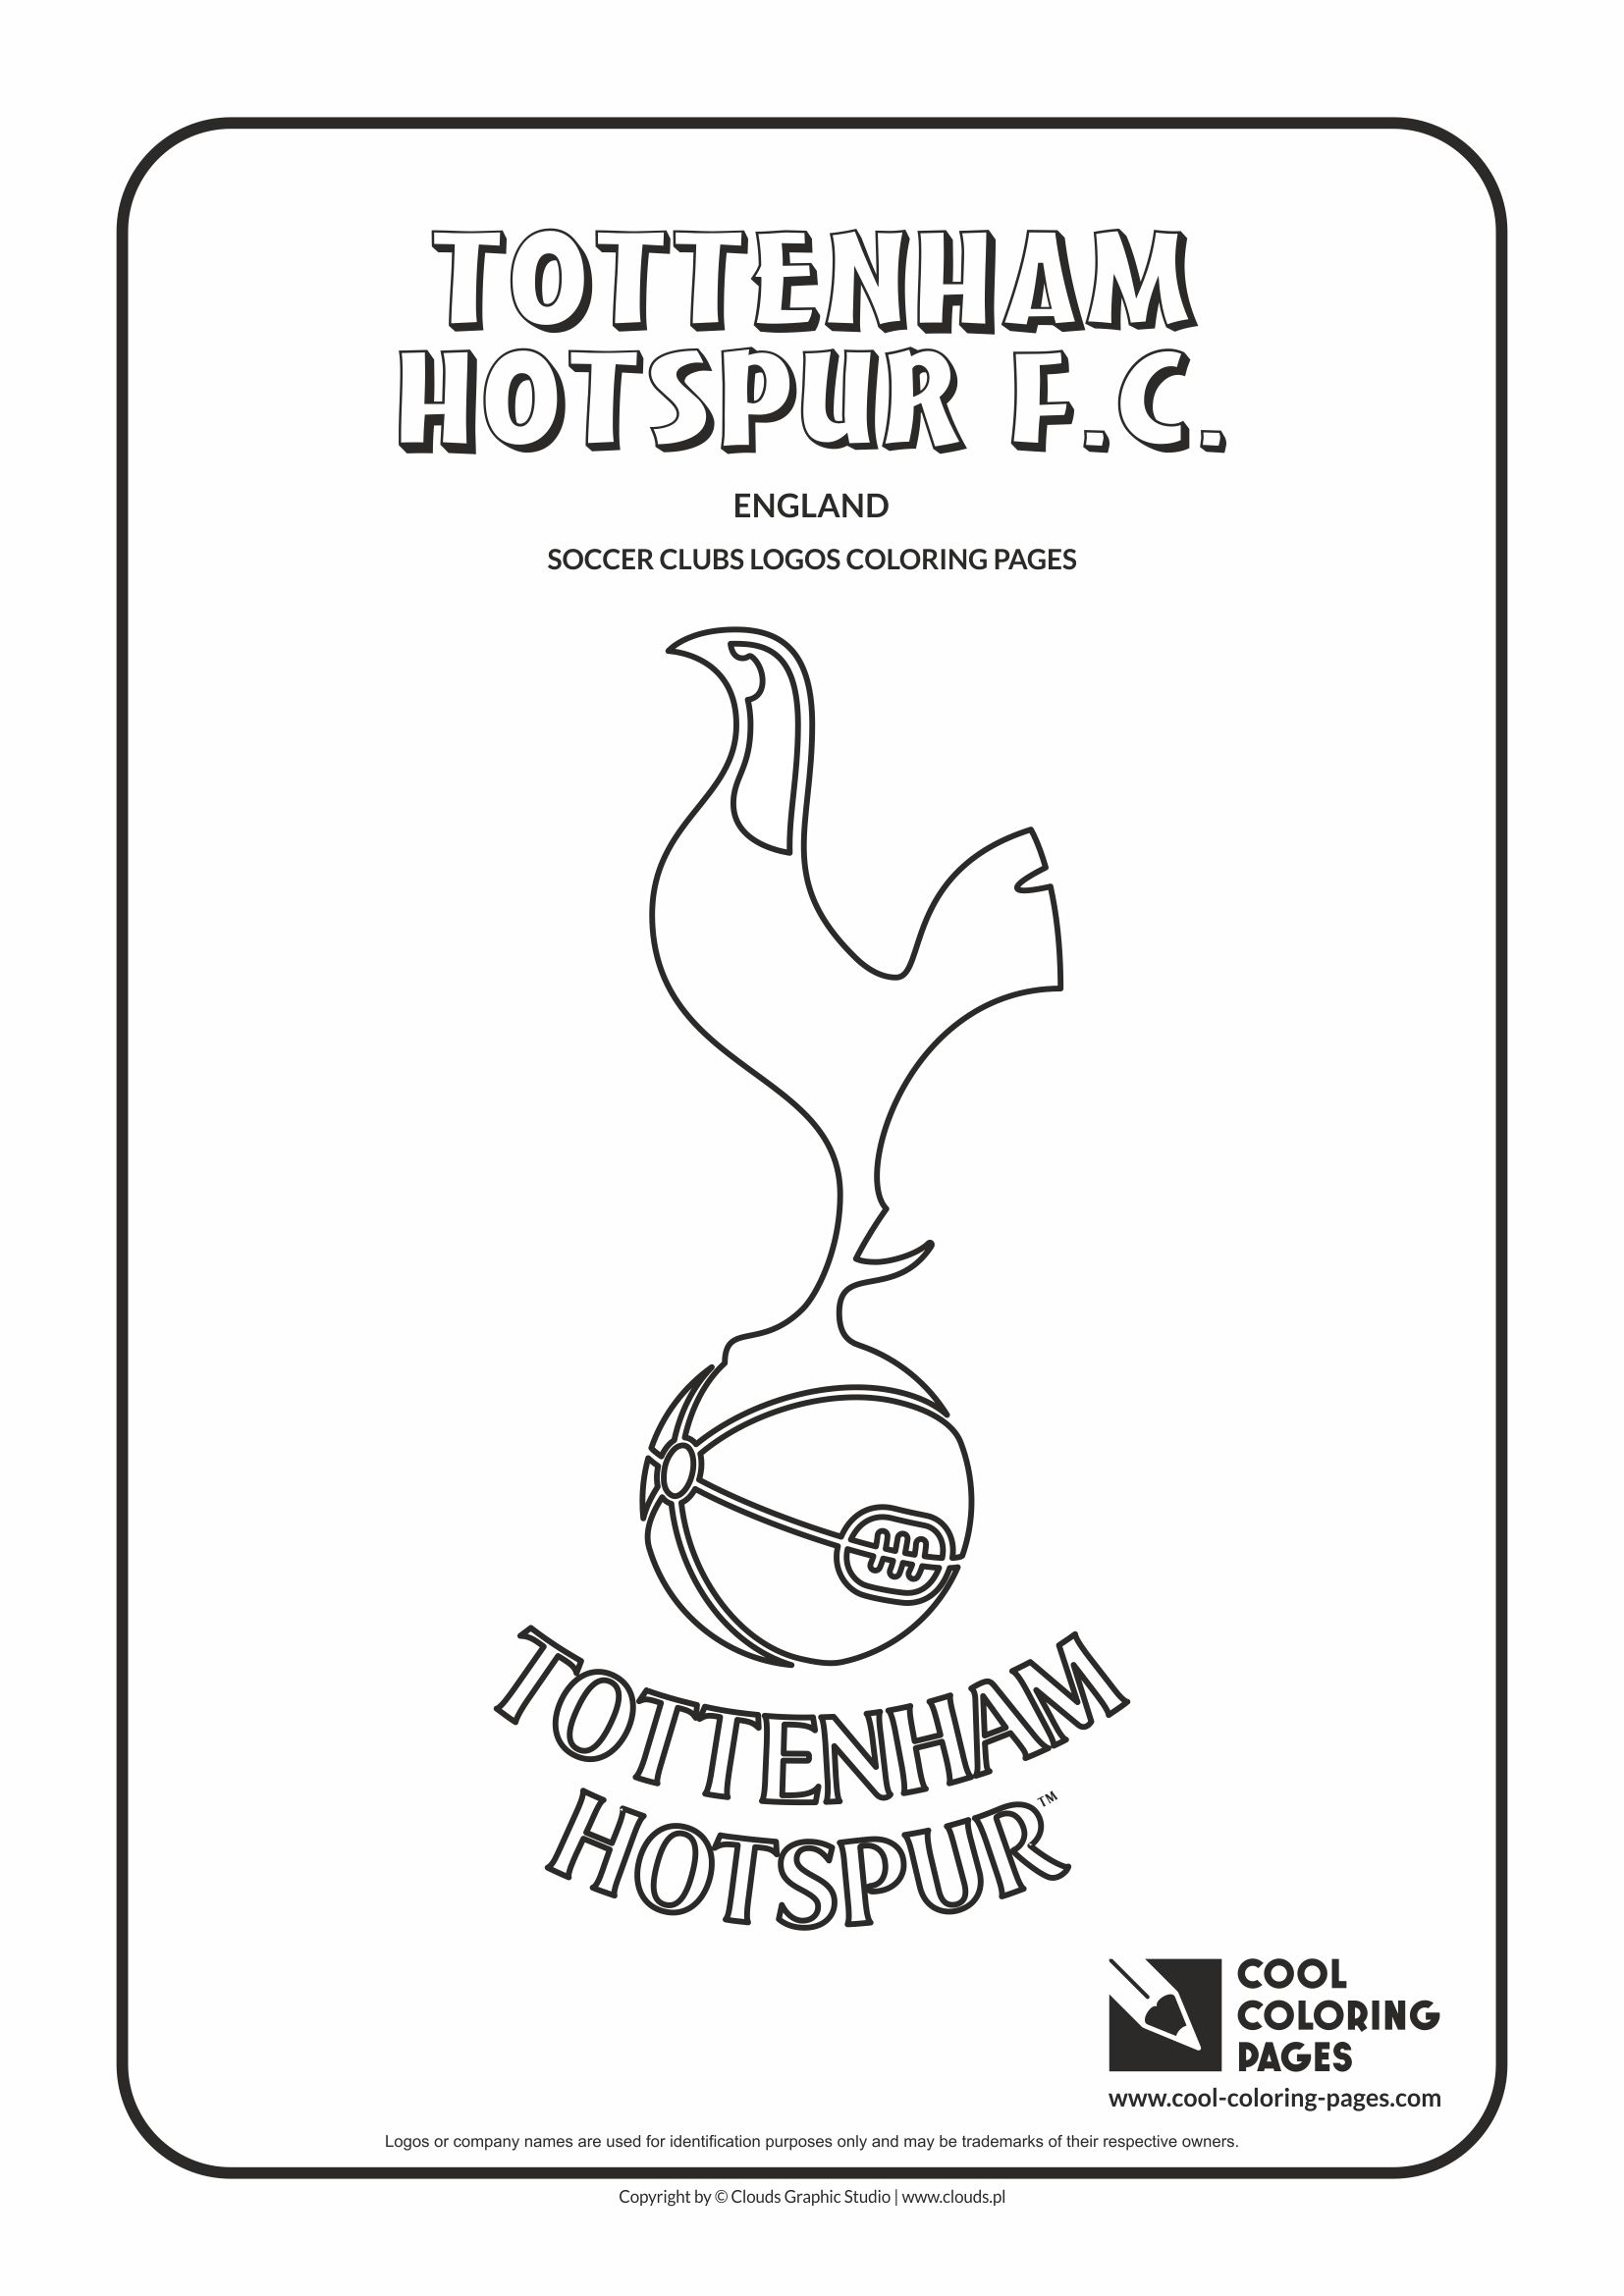 Tottenham Hotspur F.C. logo coloring / Coloring page with Tottenham Hotspur F.C. logo / Tottenham Hotspur logo colouring page.